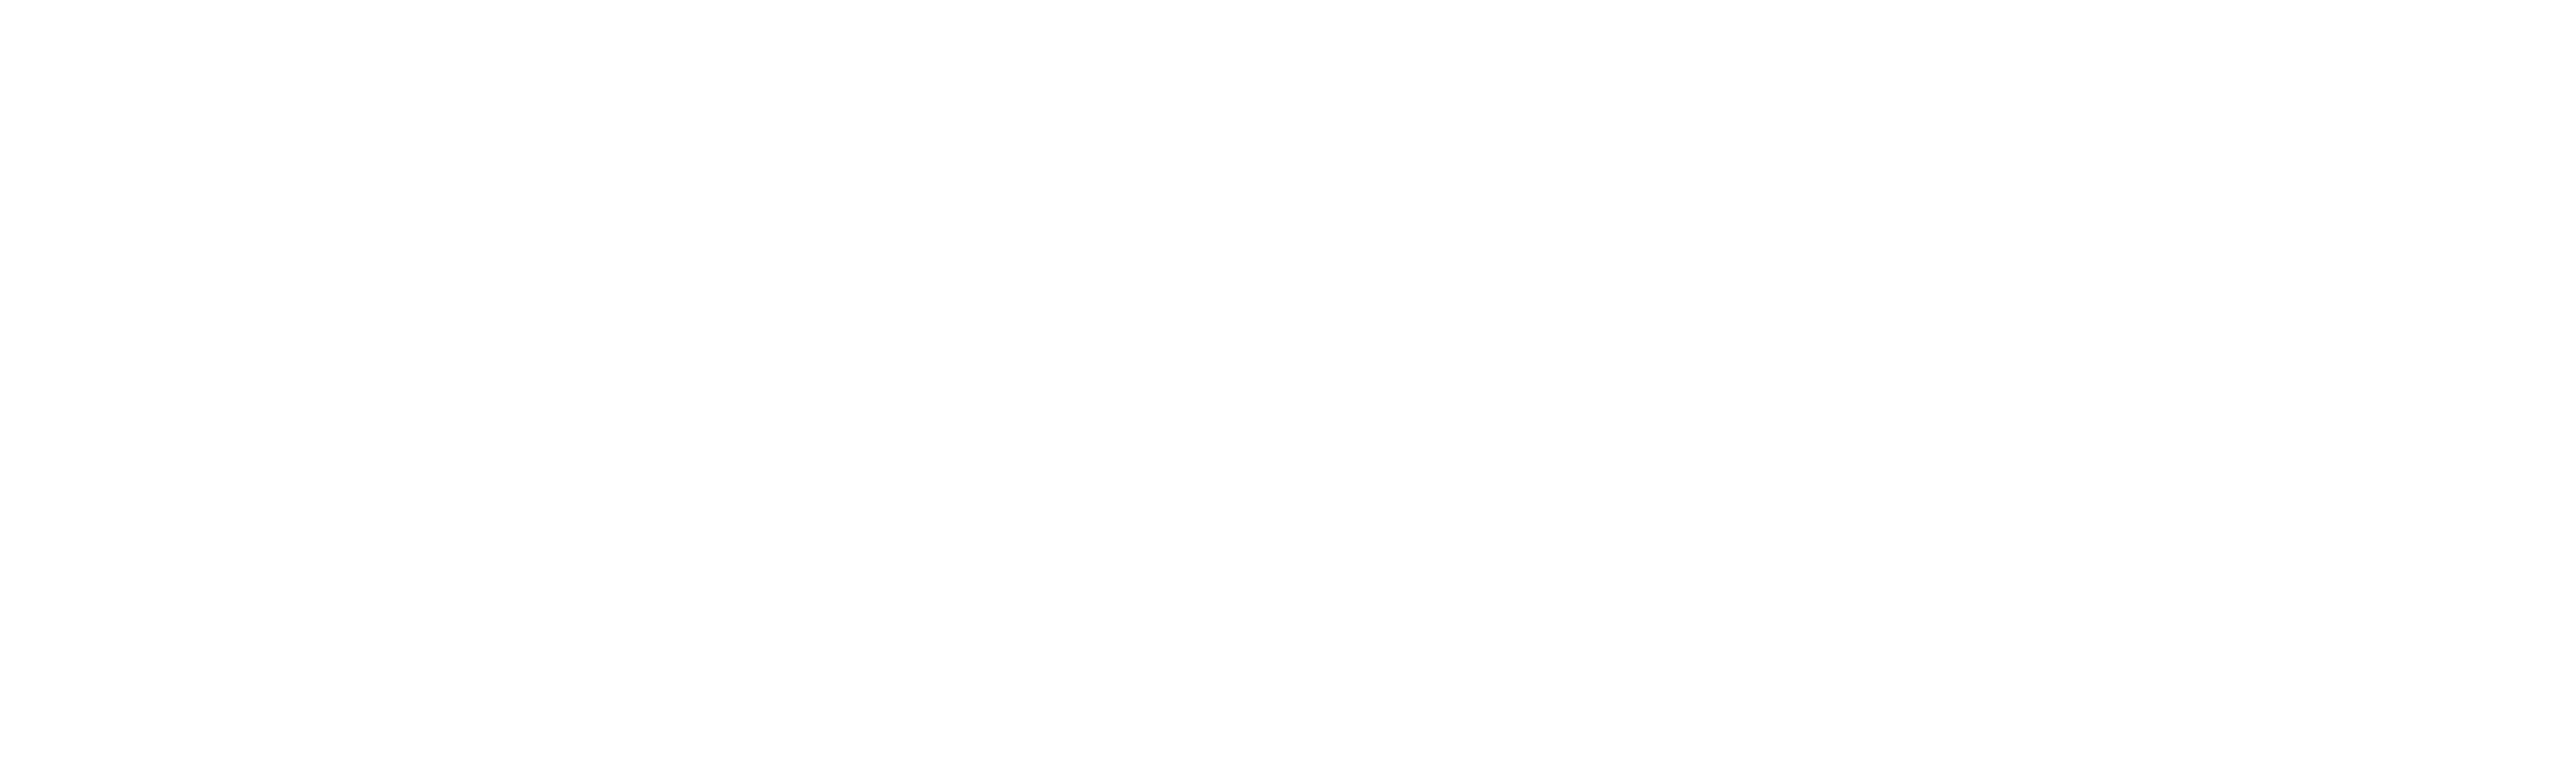 Capstone Orthotics & Prosthetics